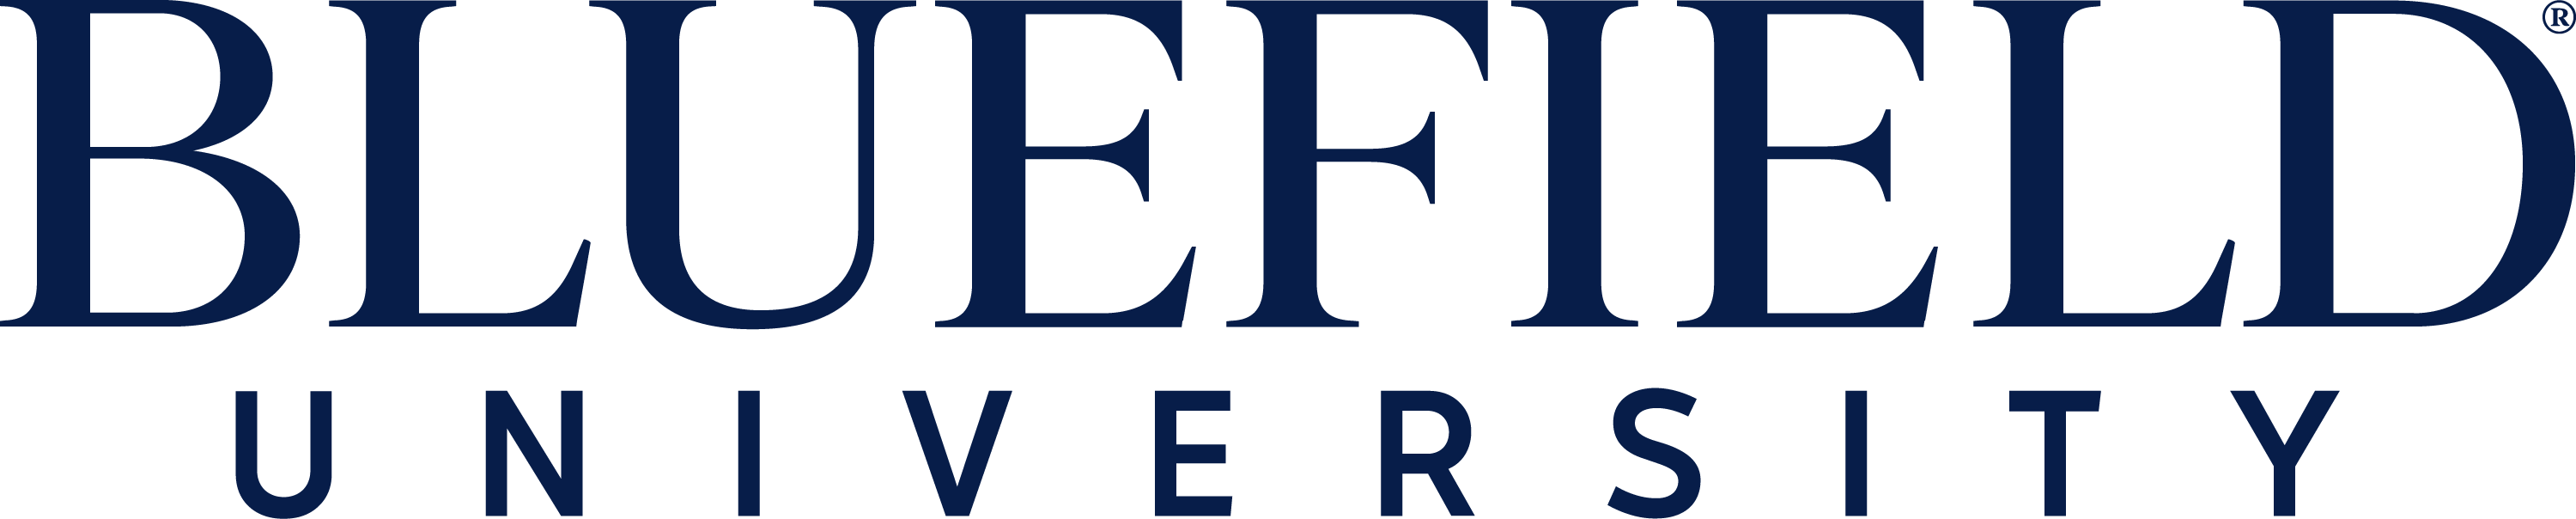 Bluefield University typeface logo in blue.